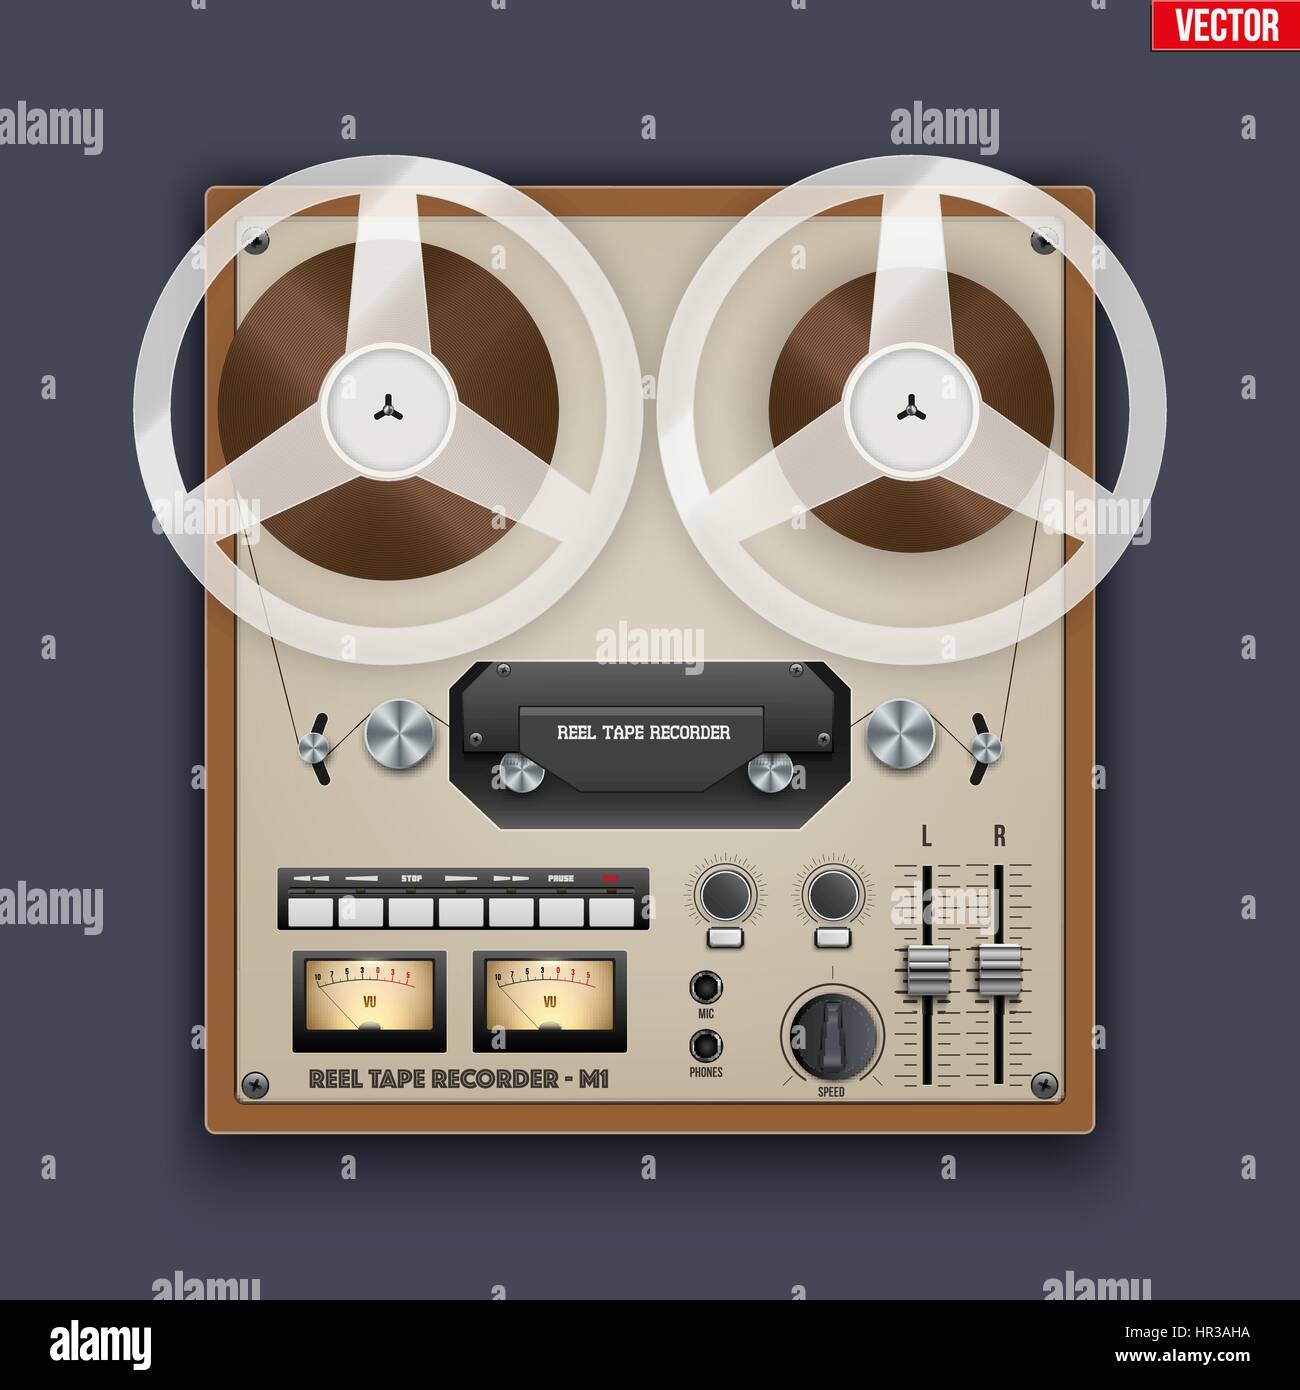 https://c8.alamy.com/comp/HR3AHA/vintage-analog-reel-tape-recorder-HR3AHA.jpg